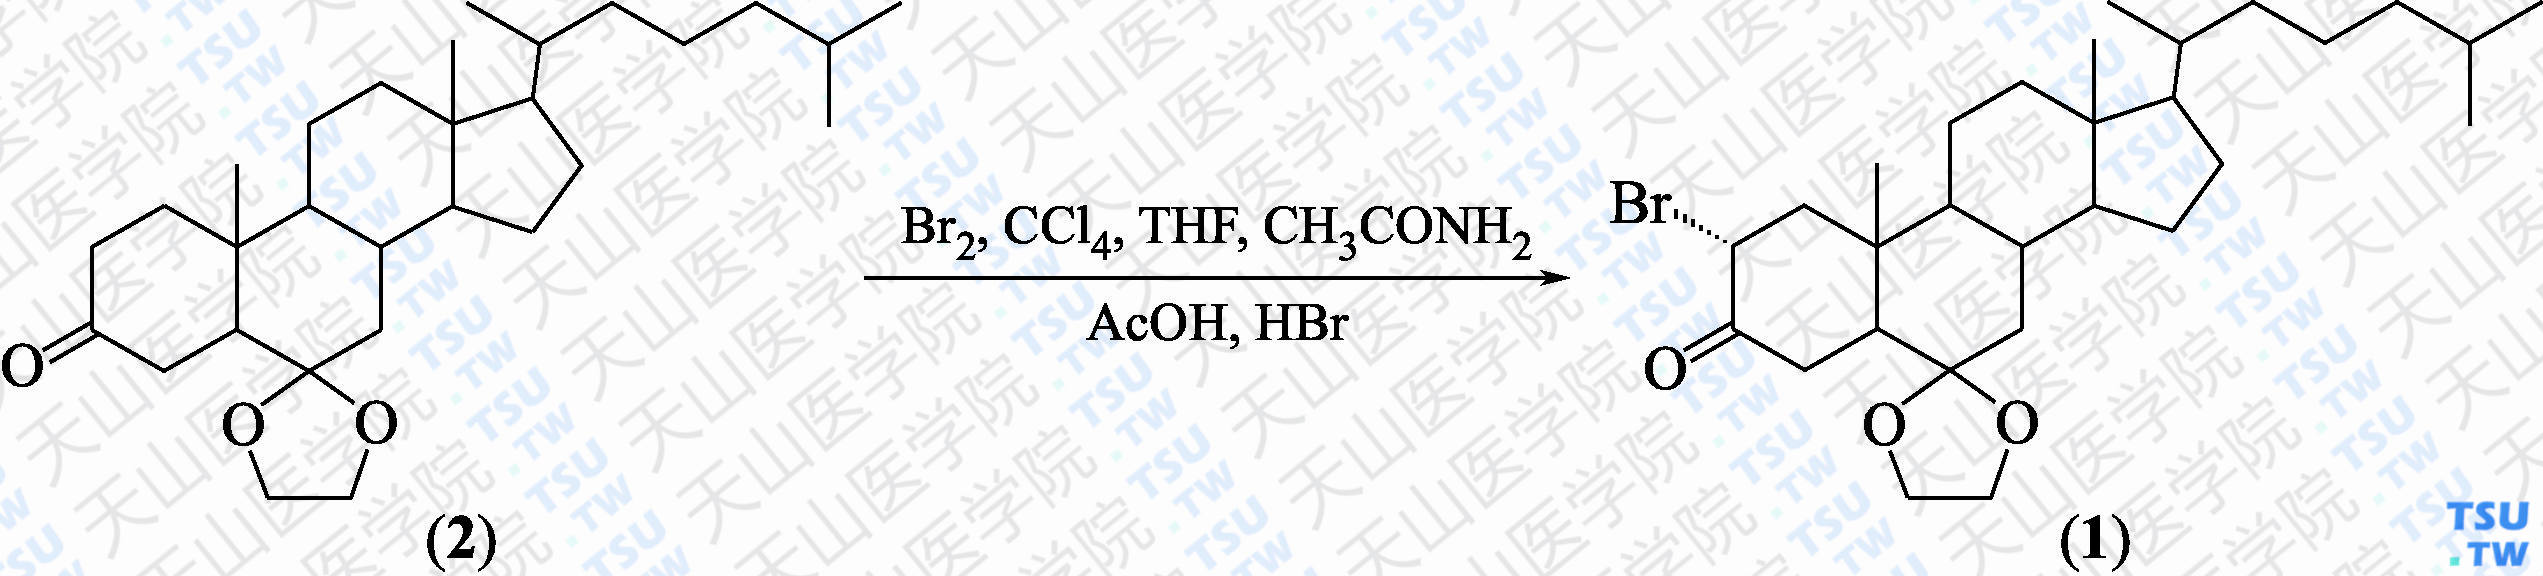 2<i>α</i>-溴-6，6-亚乙二氧基胆甾烷-3-酮（分子式：C<sub>29</sub>H<sub>47</sub>BrO<sub>3</sub>）的合成方法路线及其结构式